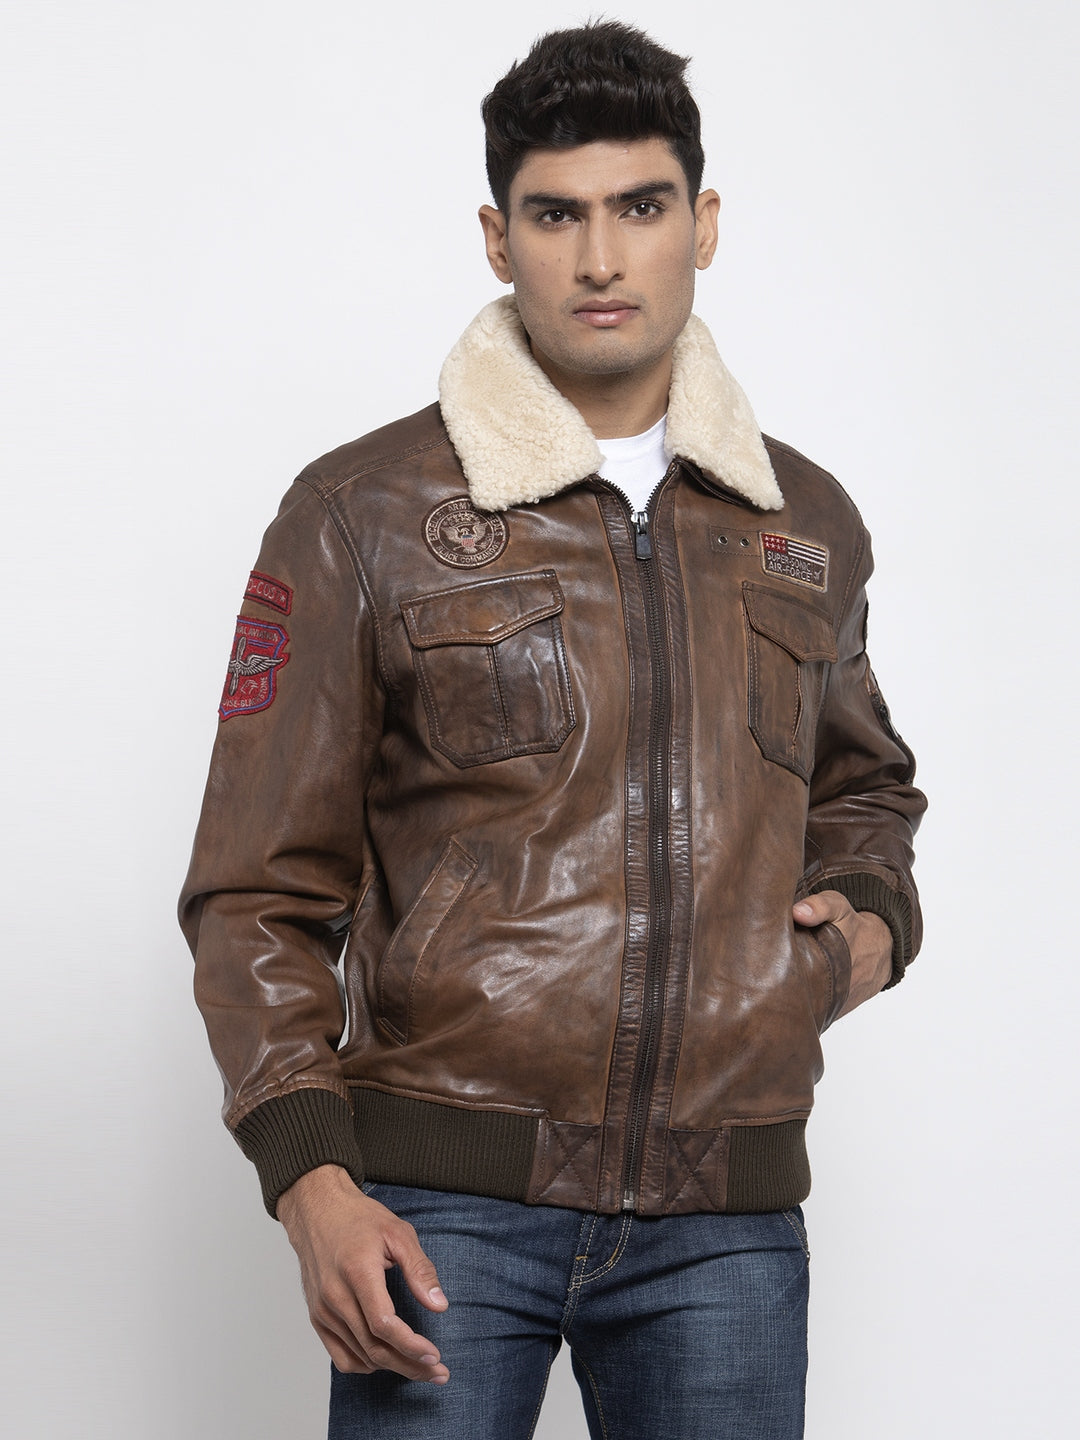 Real Suede Leather Mens Vintage Short Denim Style Retro Jean Jacket Casual  - Brown Color: Buy Online - Happy Gentleman United States